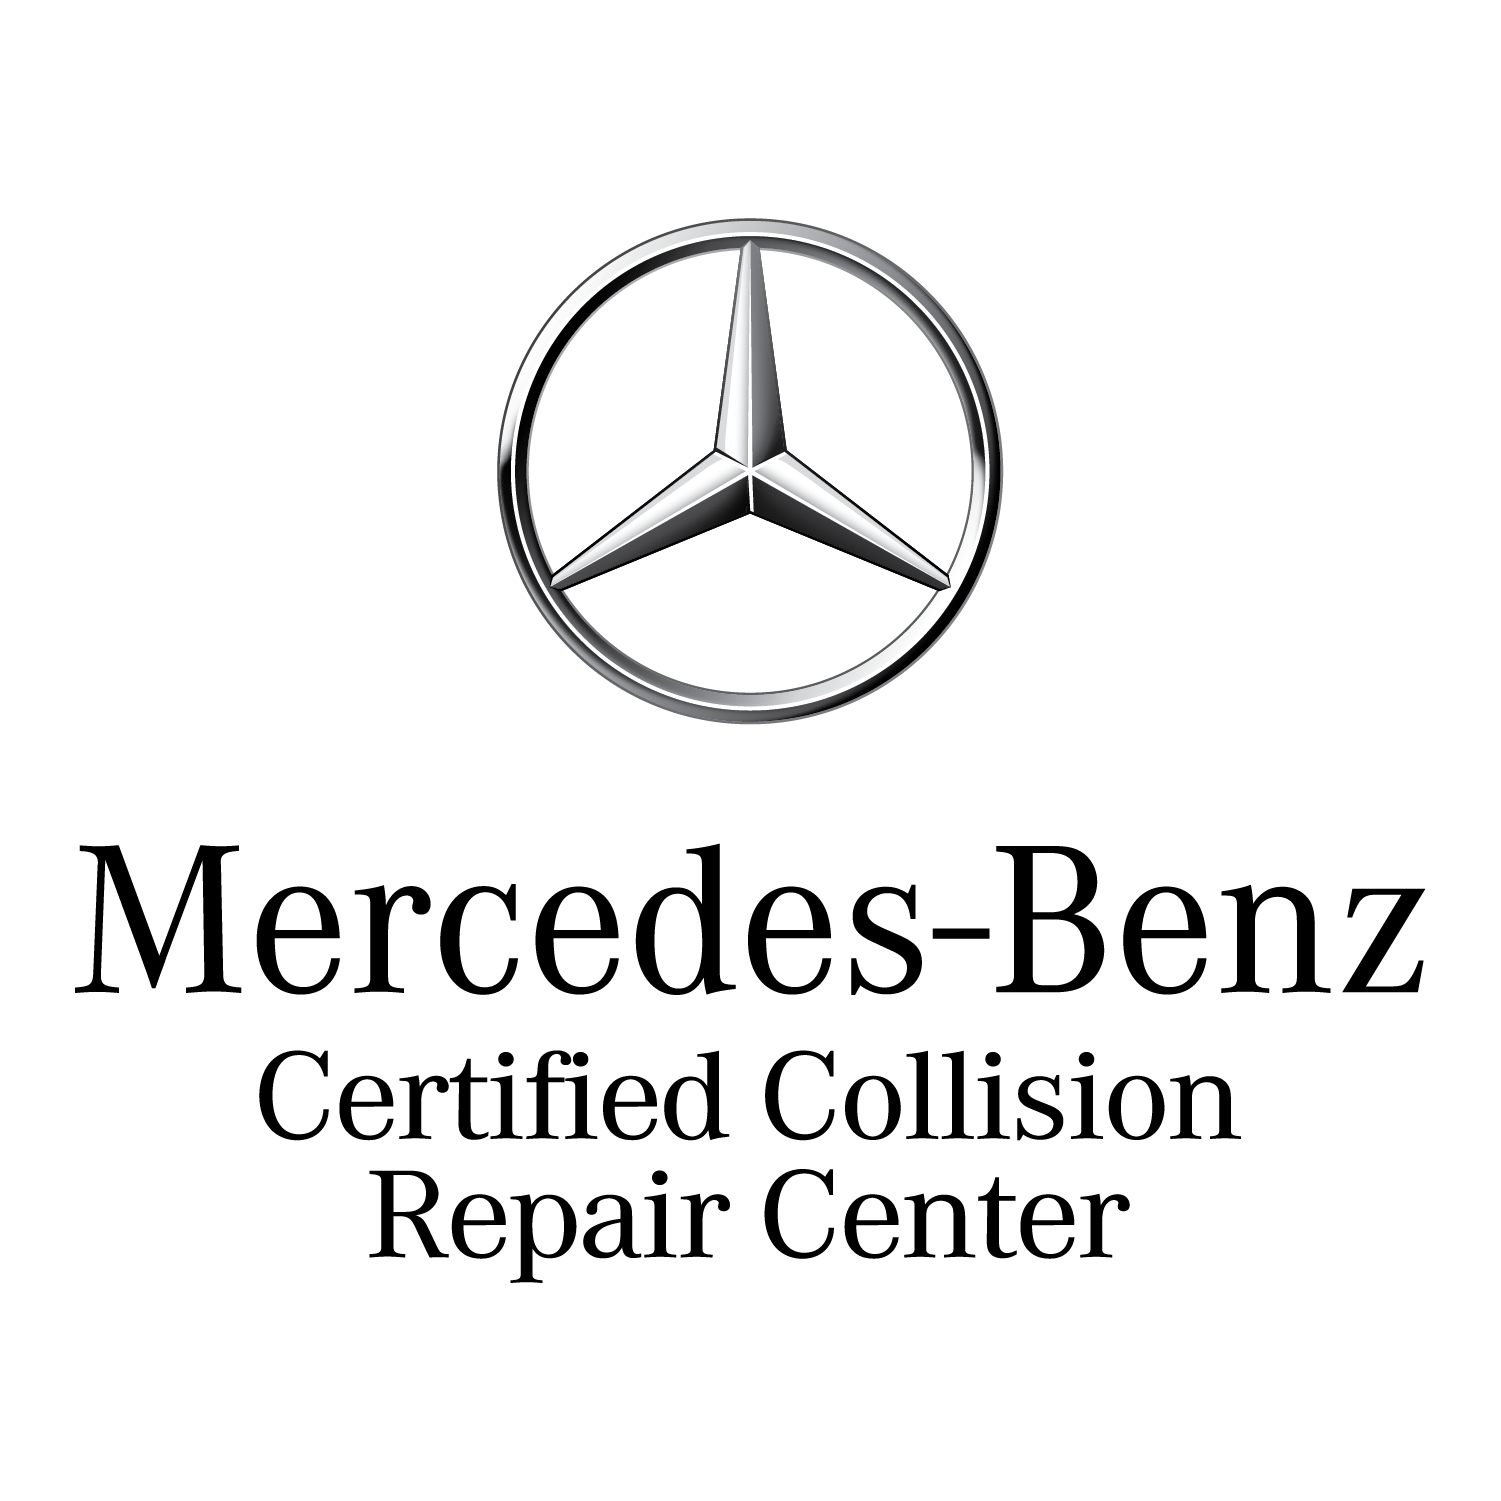 Mercedes-Benz Certified Collision Repair Center